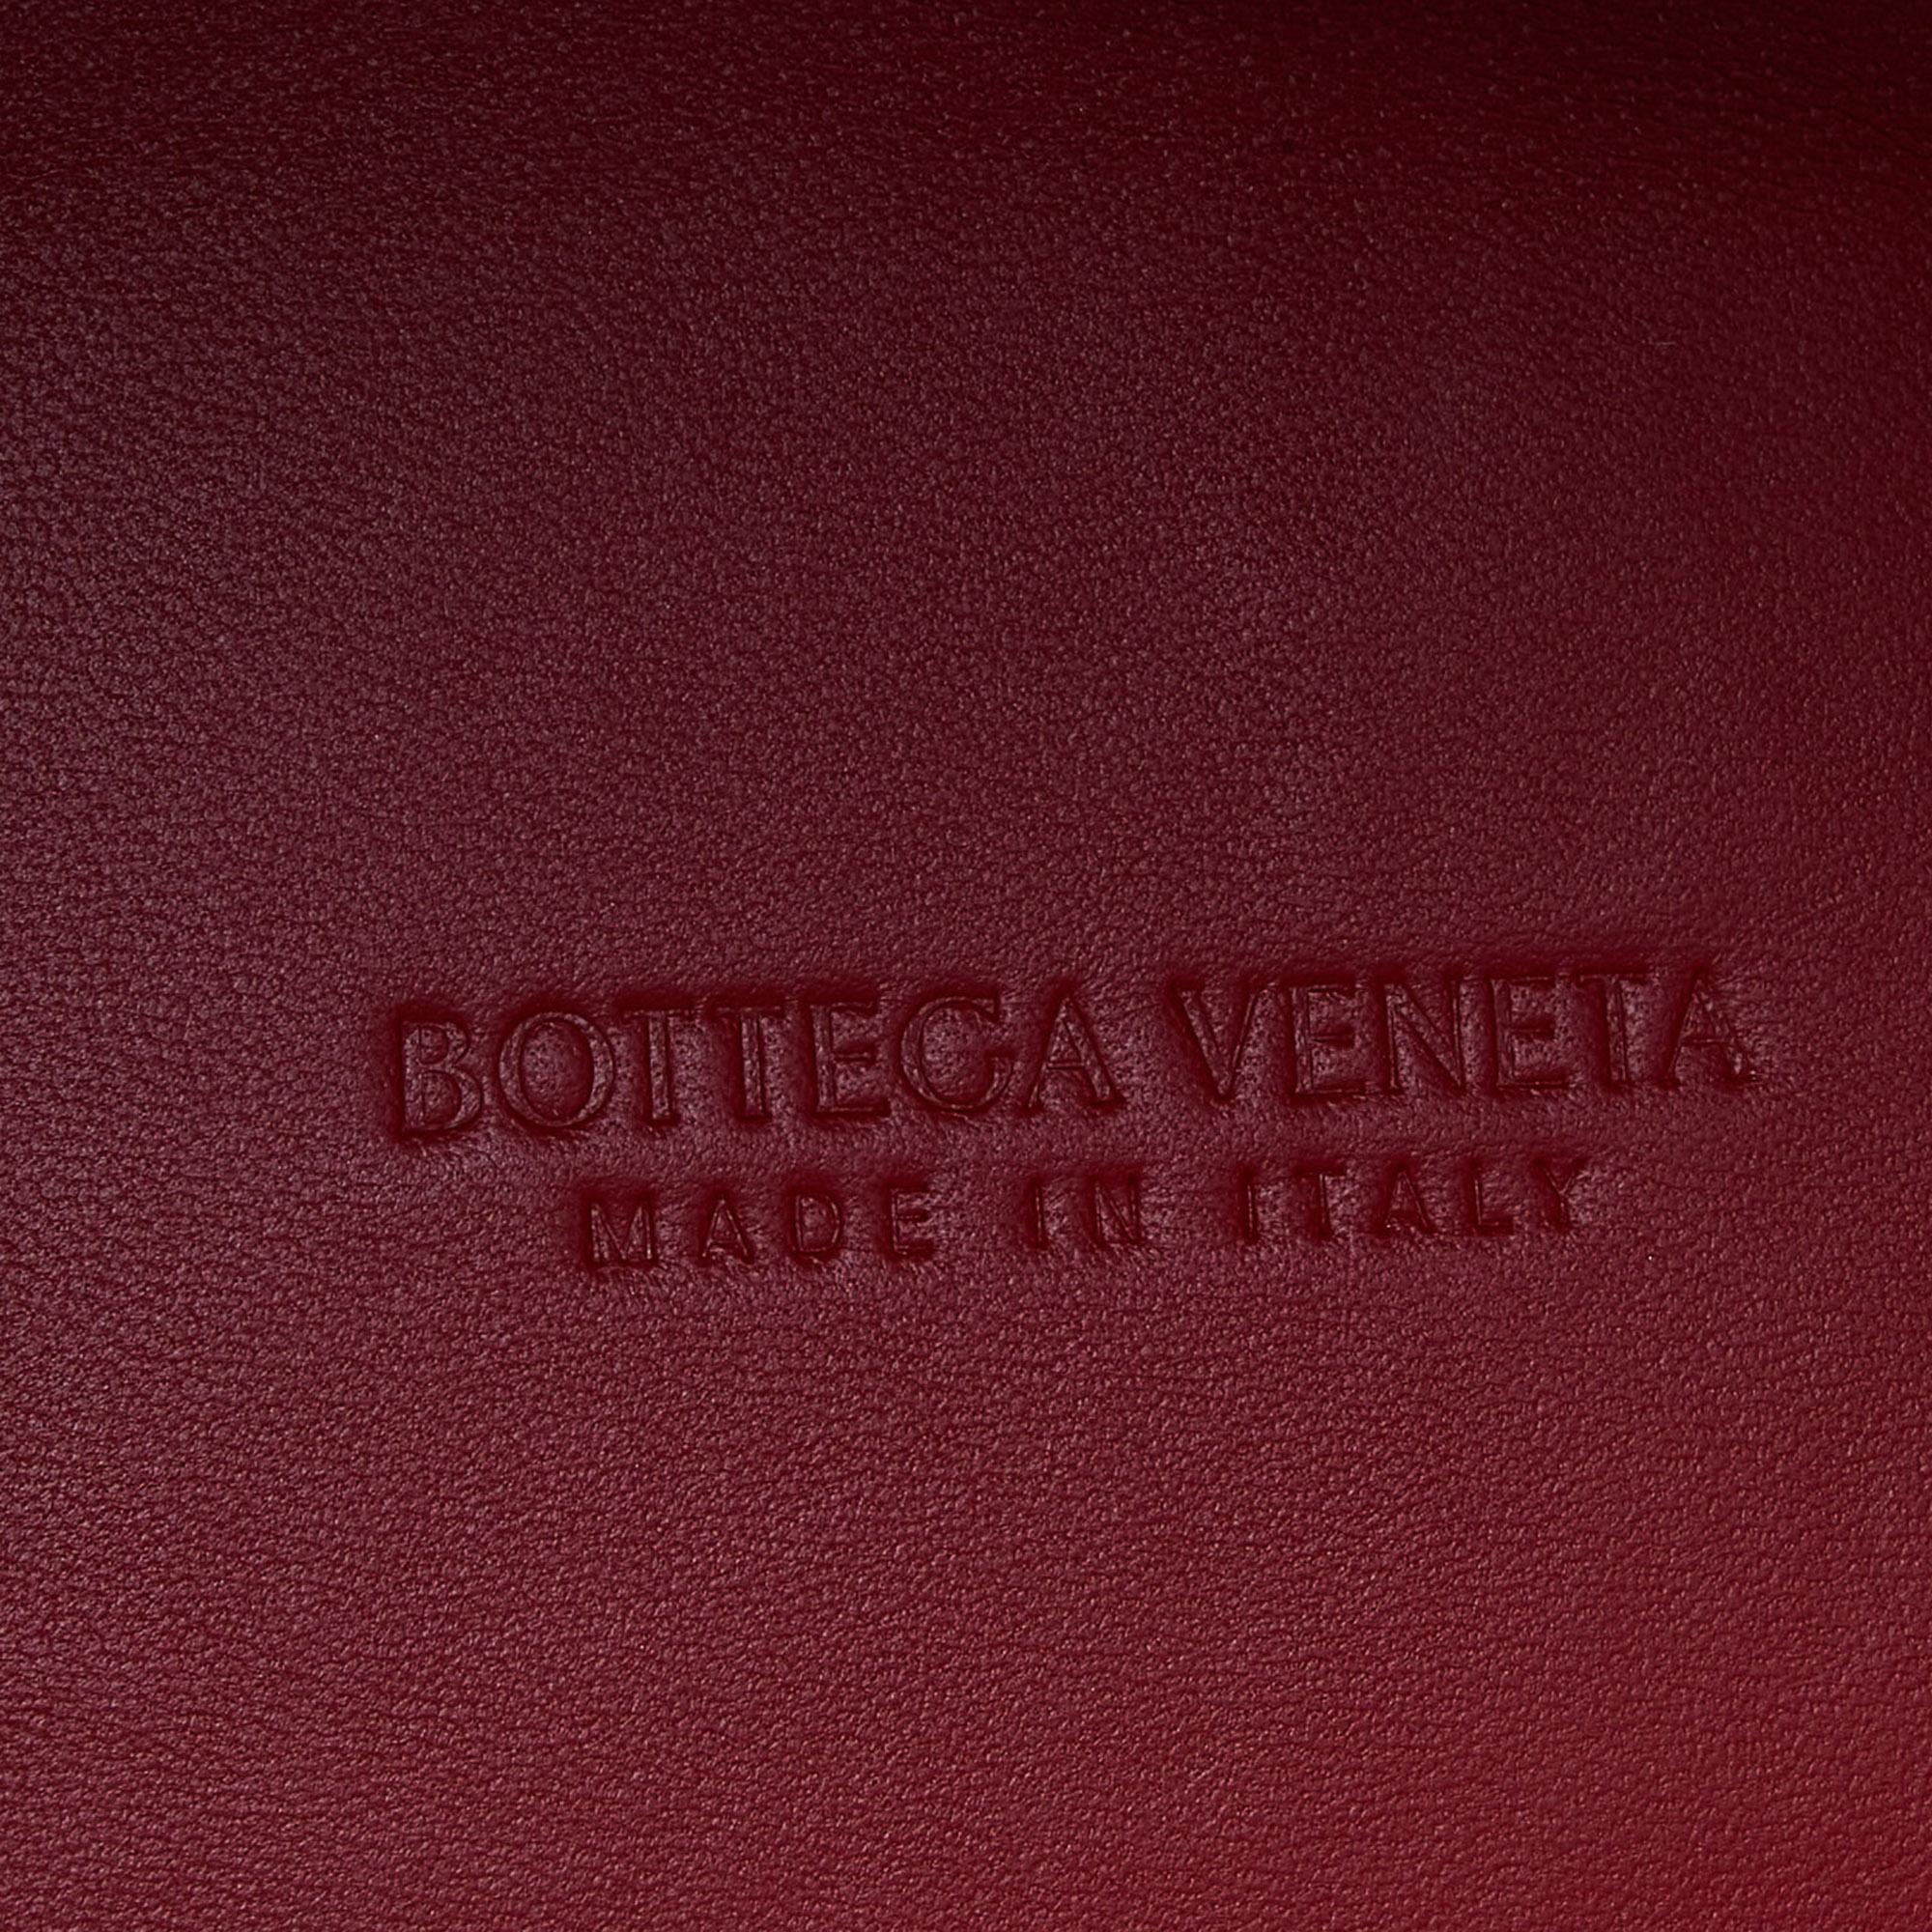 Bottega Veneta Brown Intrecciato Leather Medium Arco Tote For Sale 10